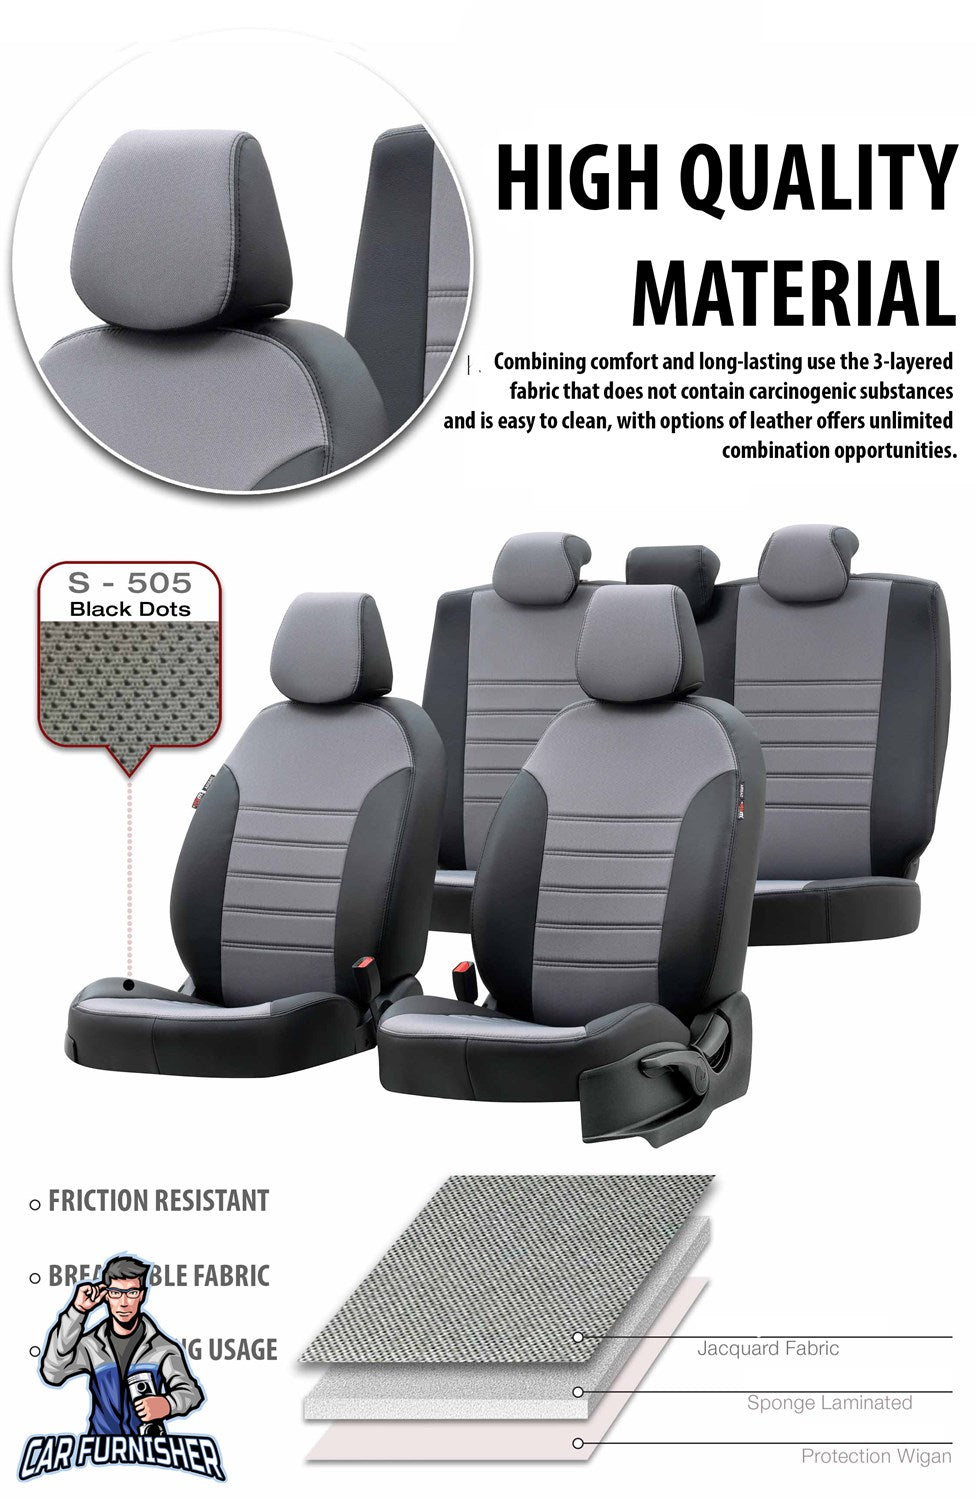 Renault Modus Seat Covers Paris Leather & Jacquard Design Gray Leather & Jacquard Fabric